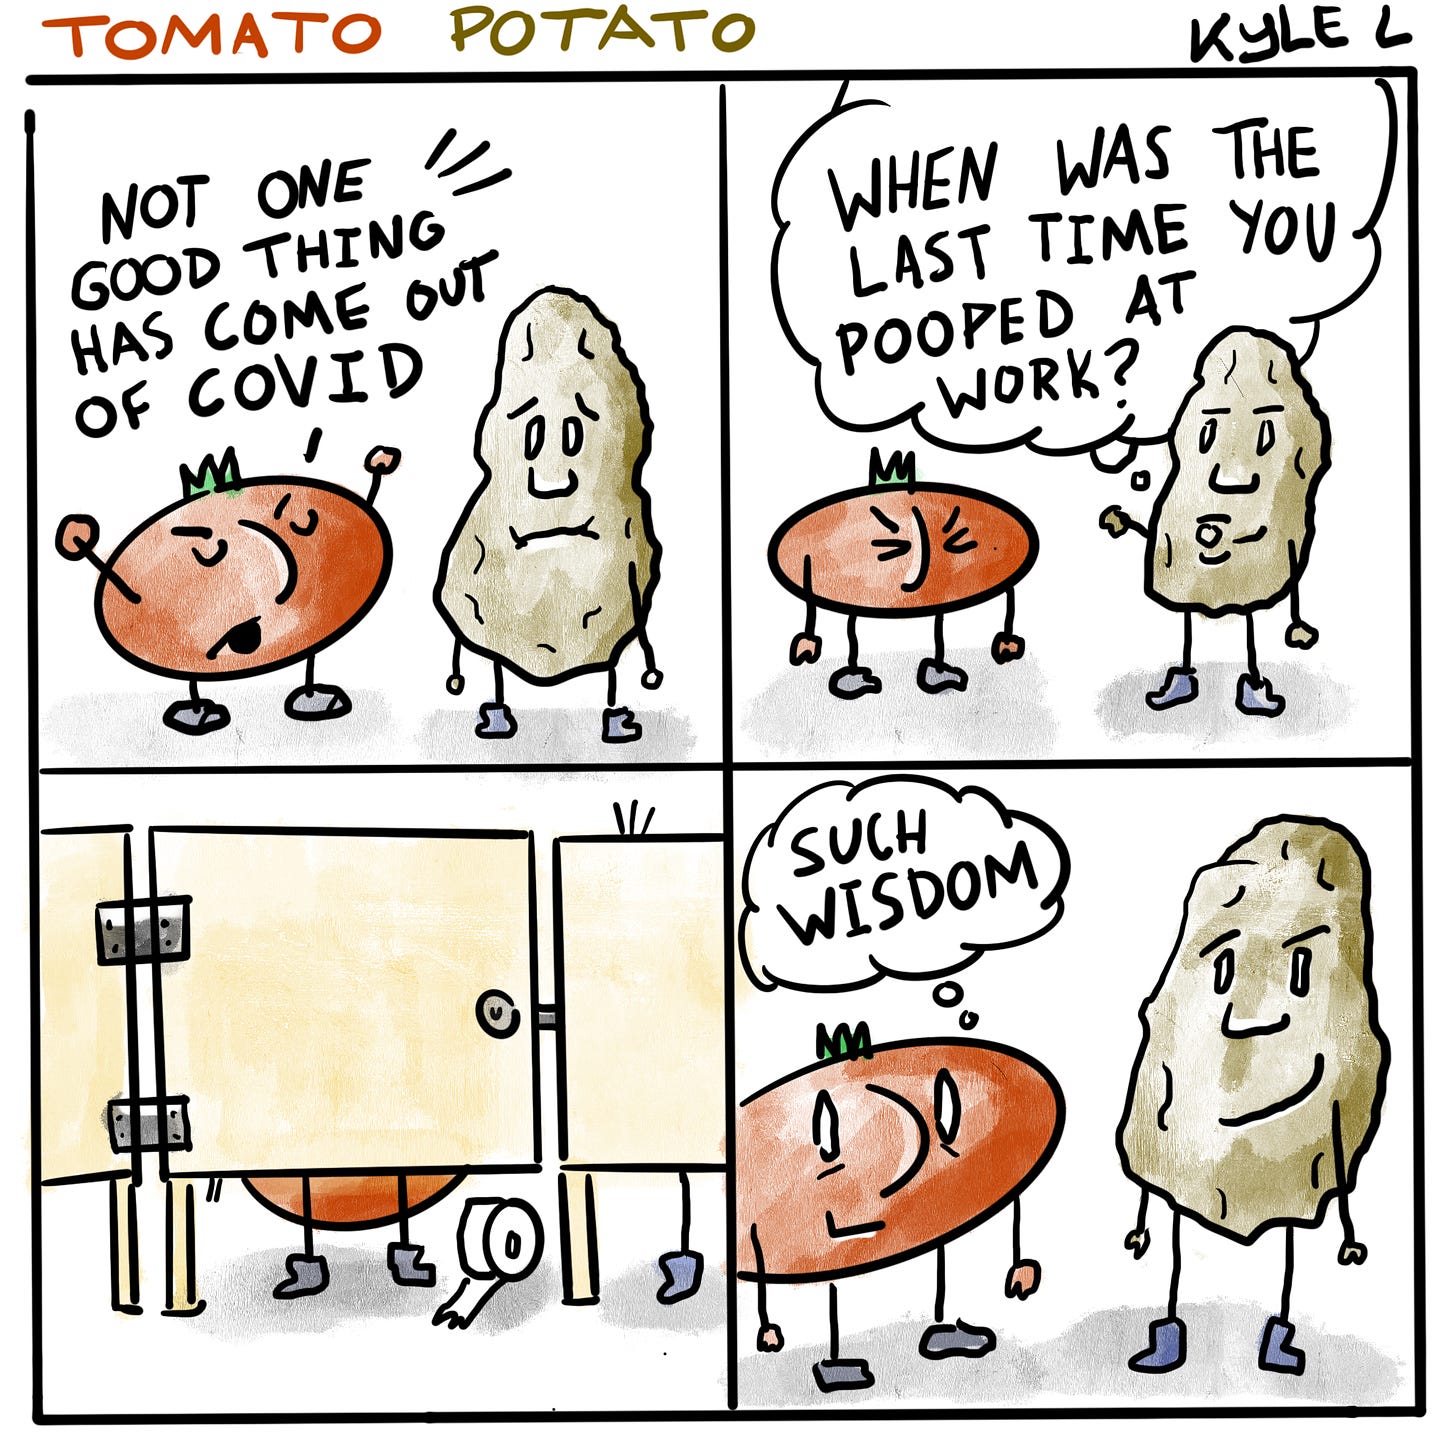 Comic: Tomato complains about COVID, potato provides perspective